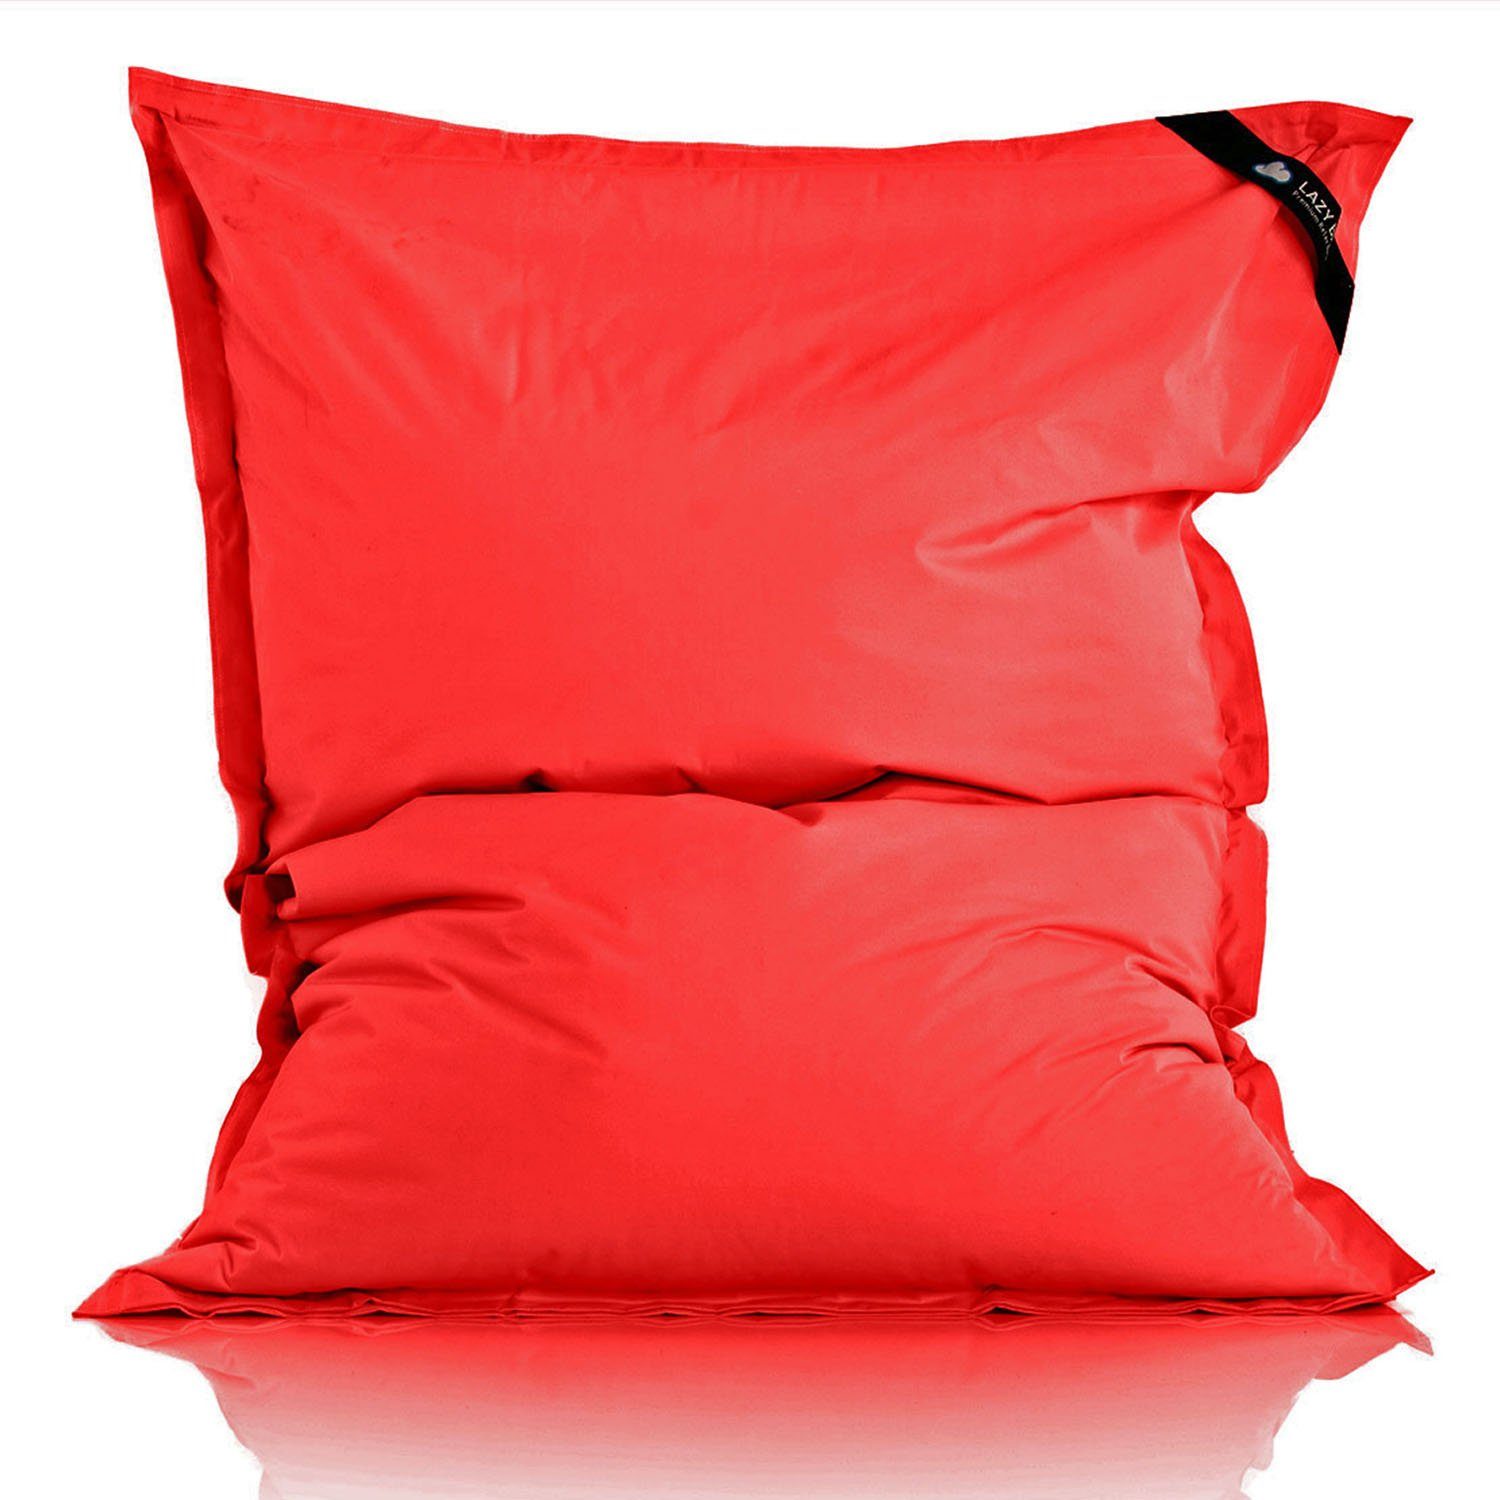 LazyBag Sitzsack Original Indoor & Outdoor (XL Sessel Bean-Bag Rot Riesensitzsack), 250 Junior-Sitzkissen Liter